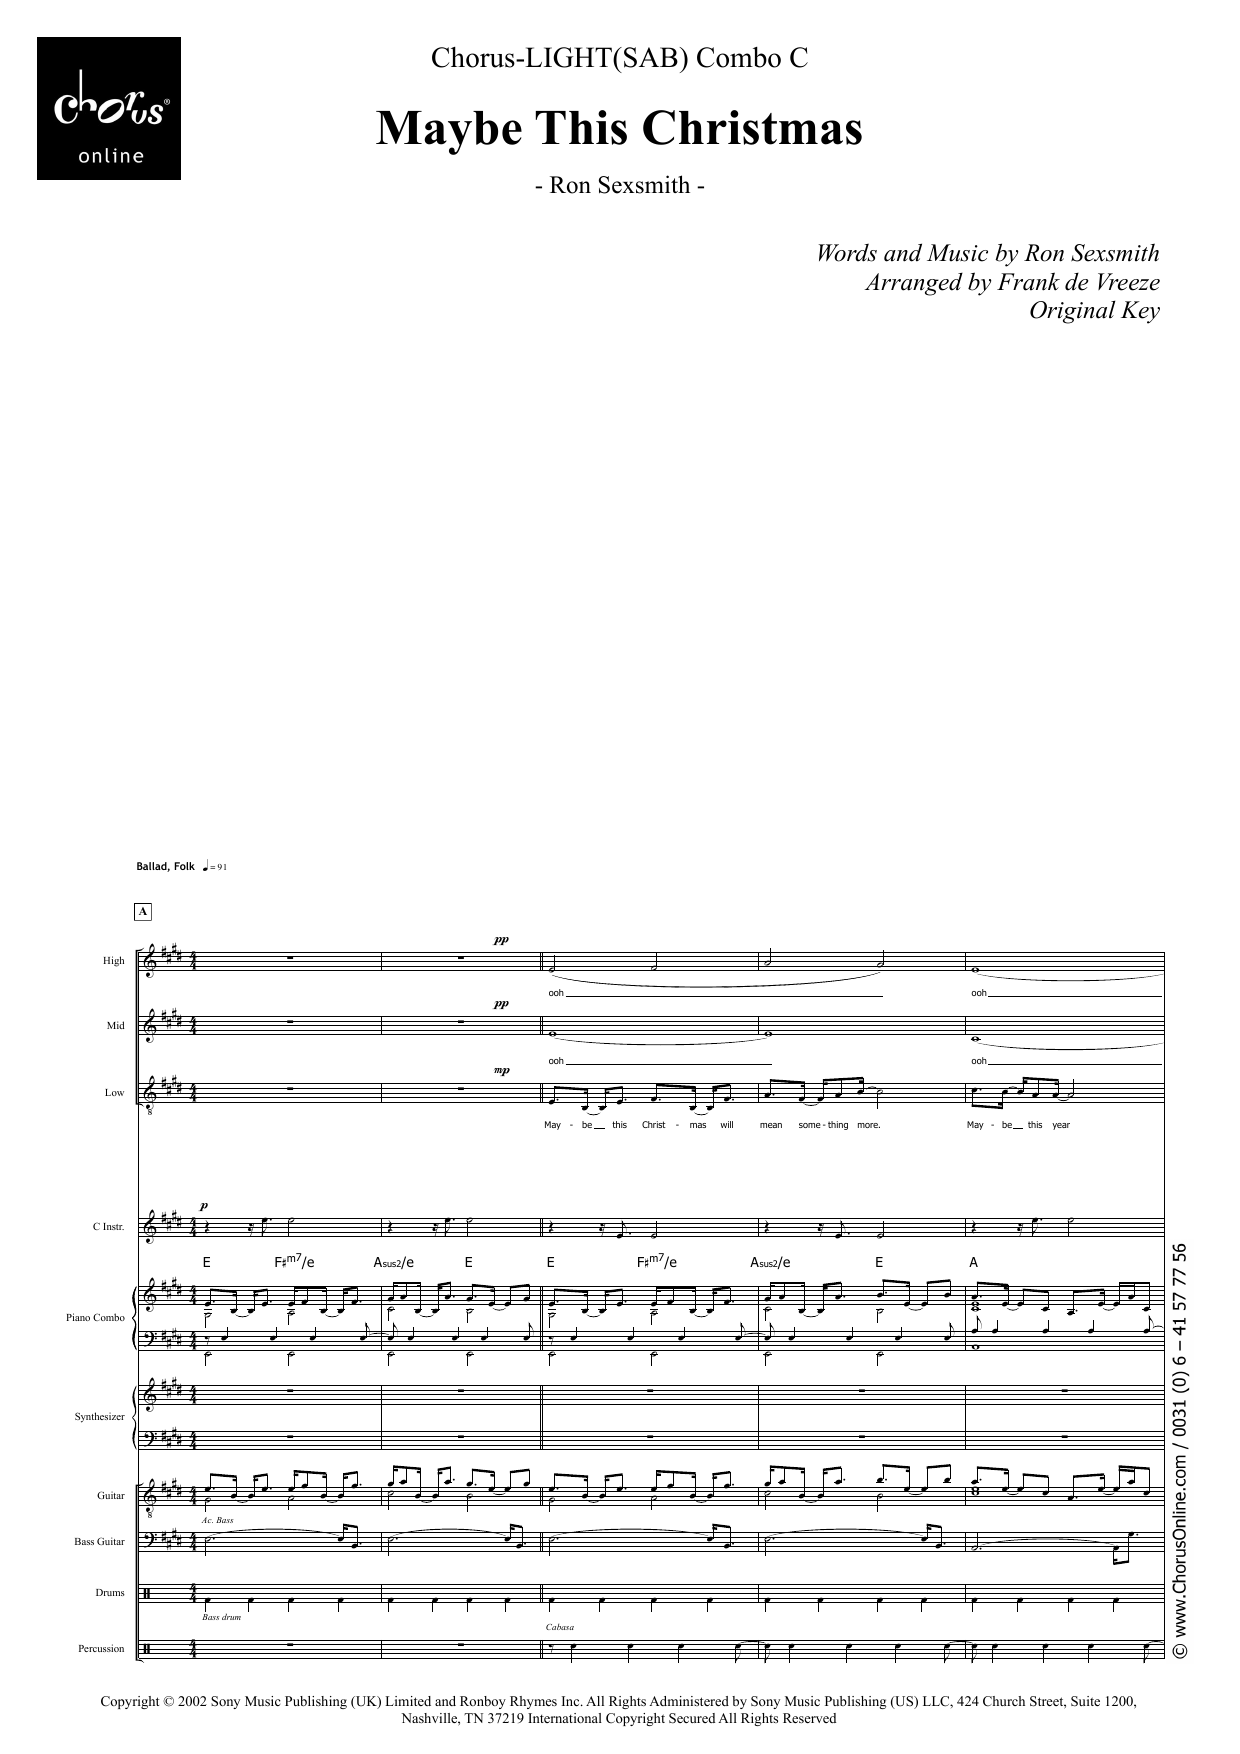 Nils Landgren, Johan Norberg and Jonas Knutsson Maybe This Christmas (arr. Frank de Vreeze) sheet music notes printable PDF score